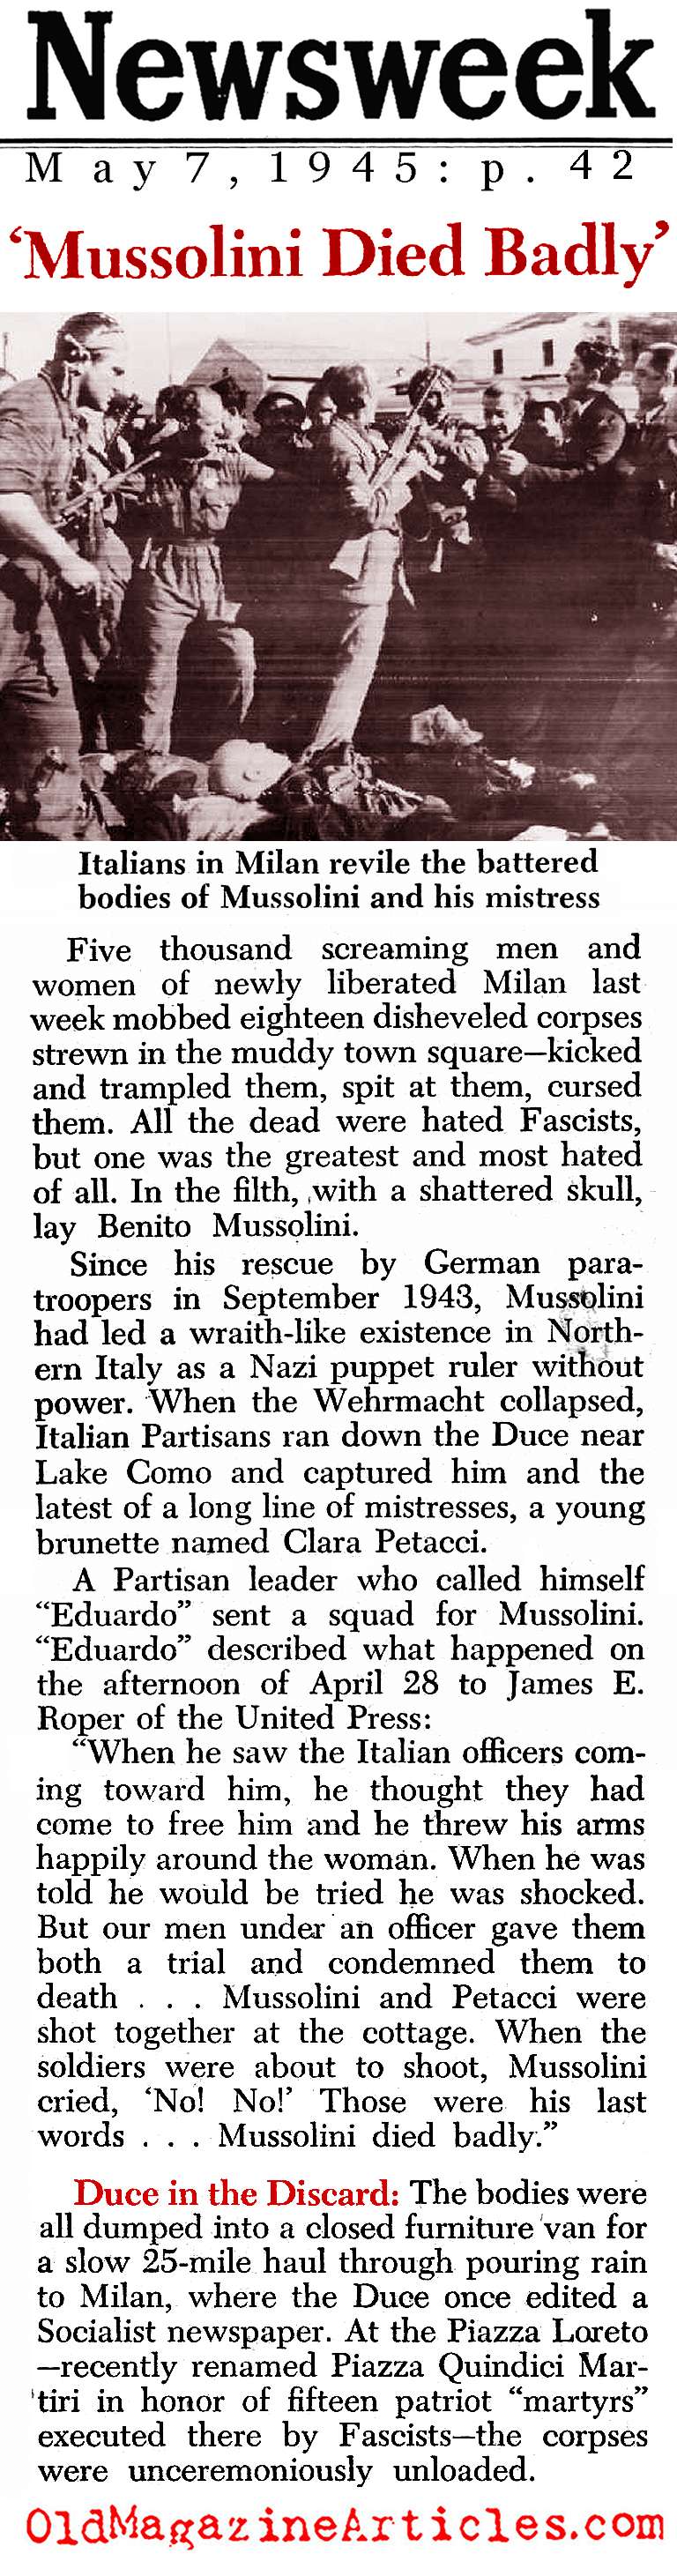 He Died Badly (Newsweek Magazine, 1945)